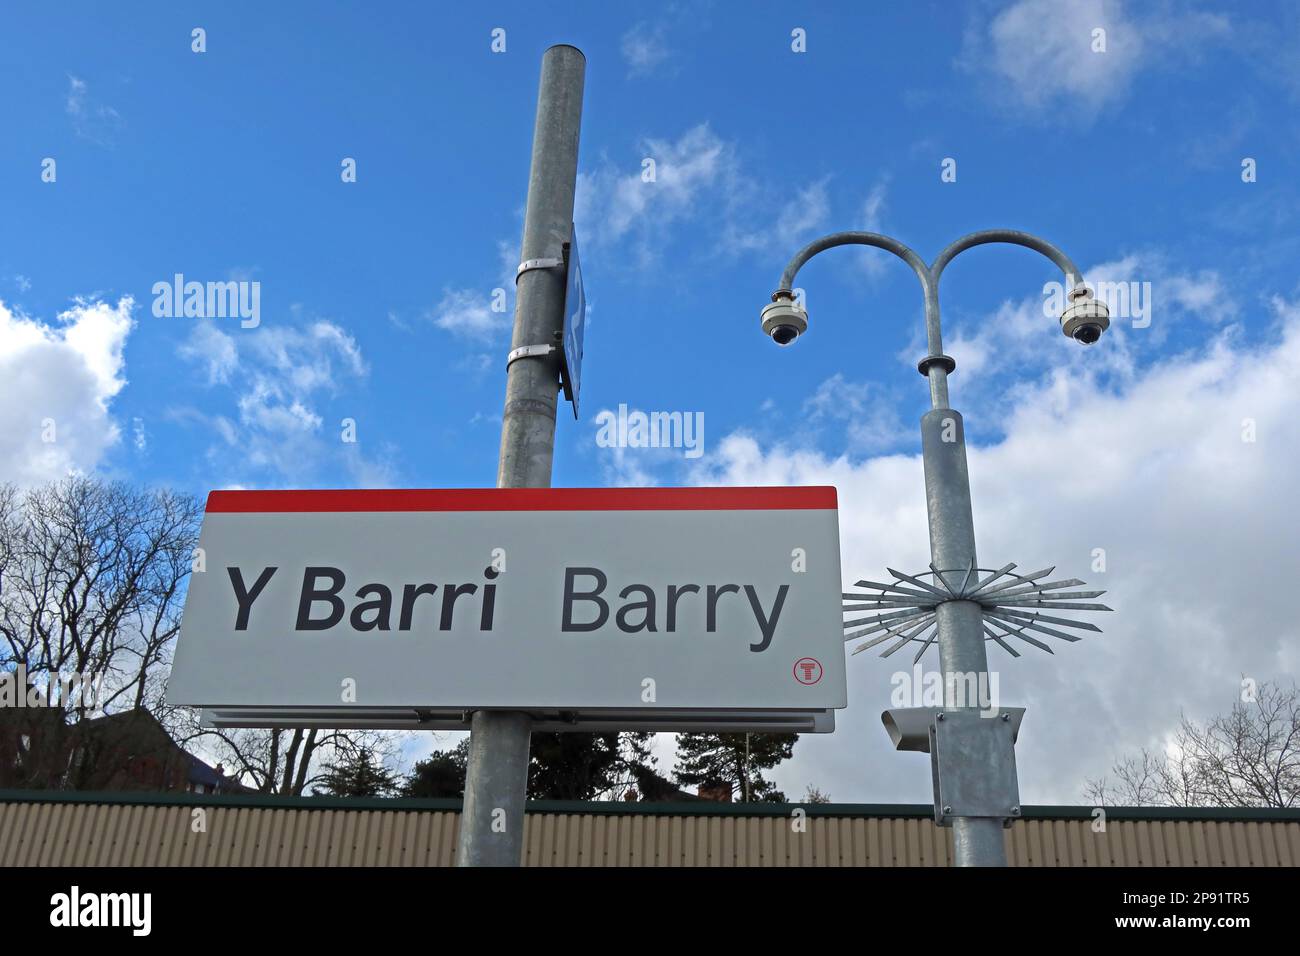 Blue skies at Barry railway station platform sign with CCTV, Broad Street, ( Y Barri), Vale of Glamorgan, South Wales, Cymru, UK Stock Photo